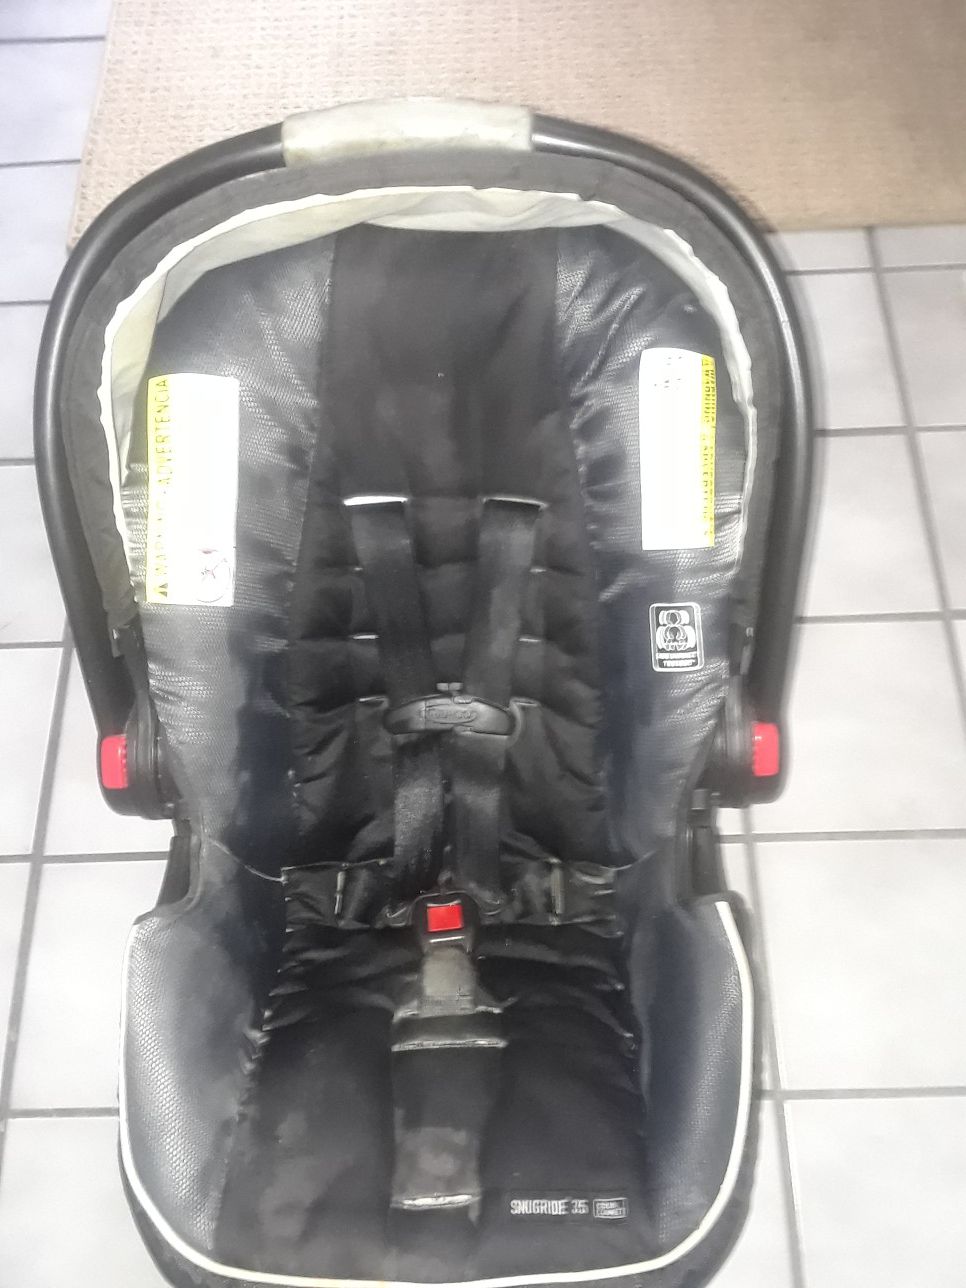 GRACO SNUGRIDE 35 BABY CAR SEAT